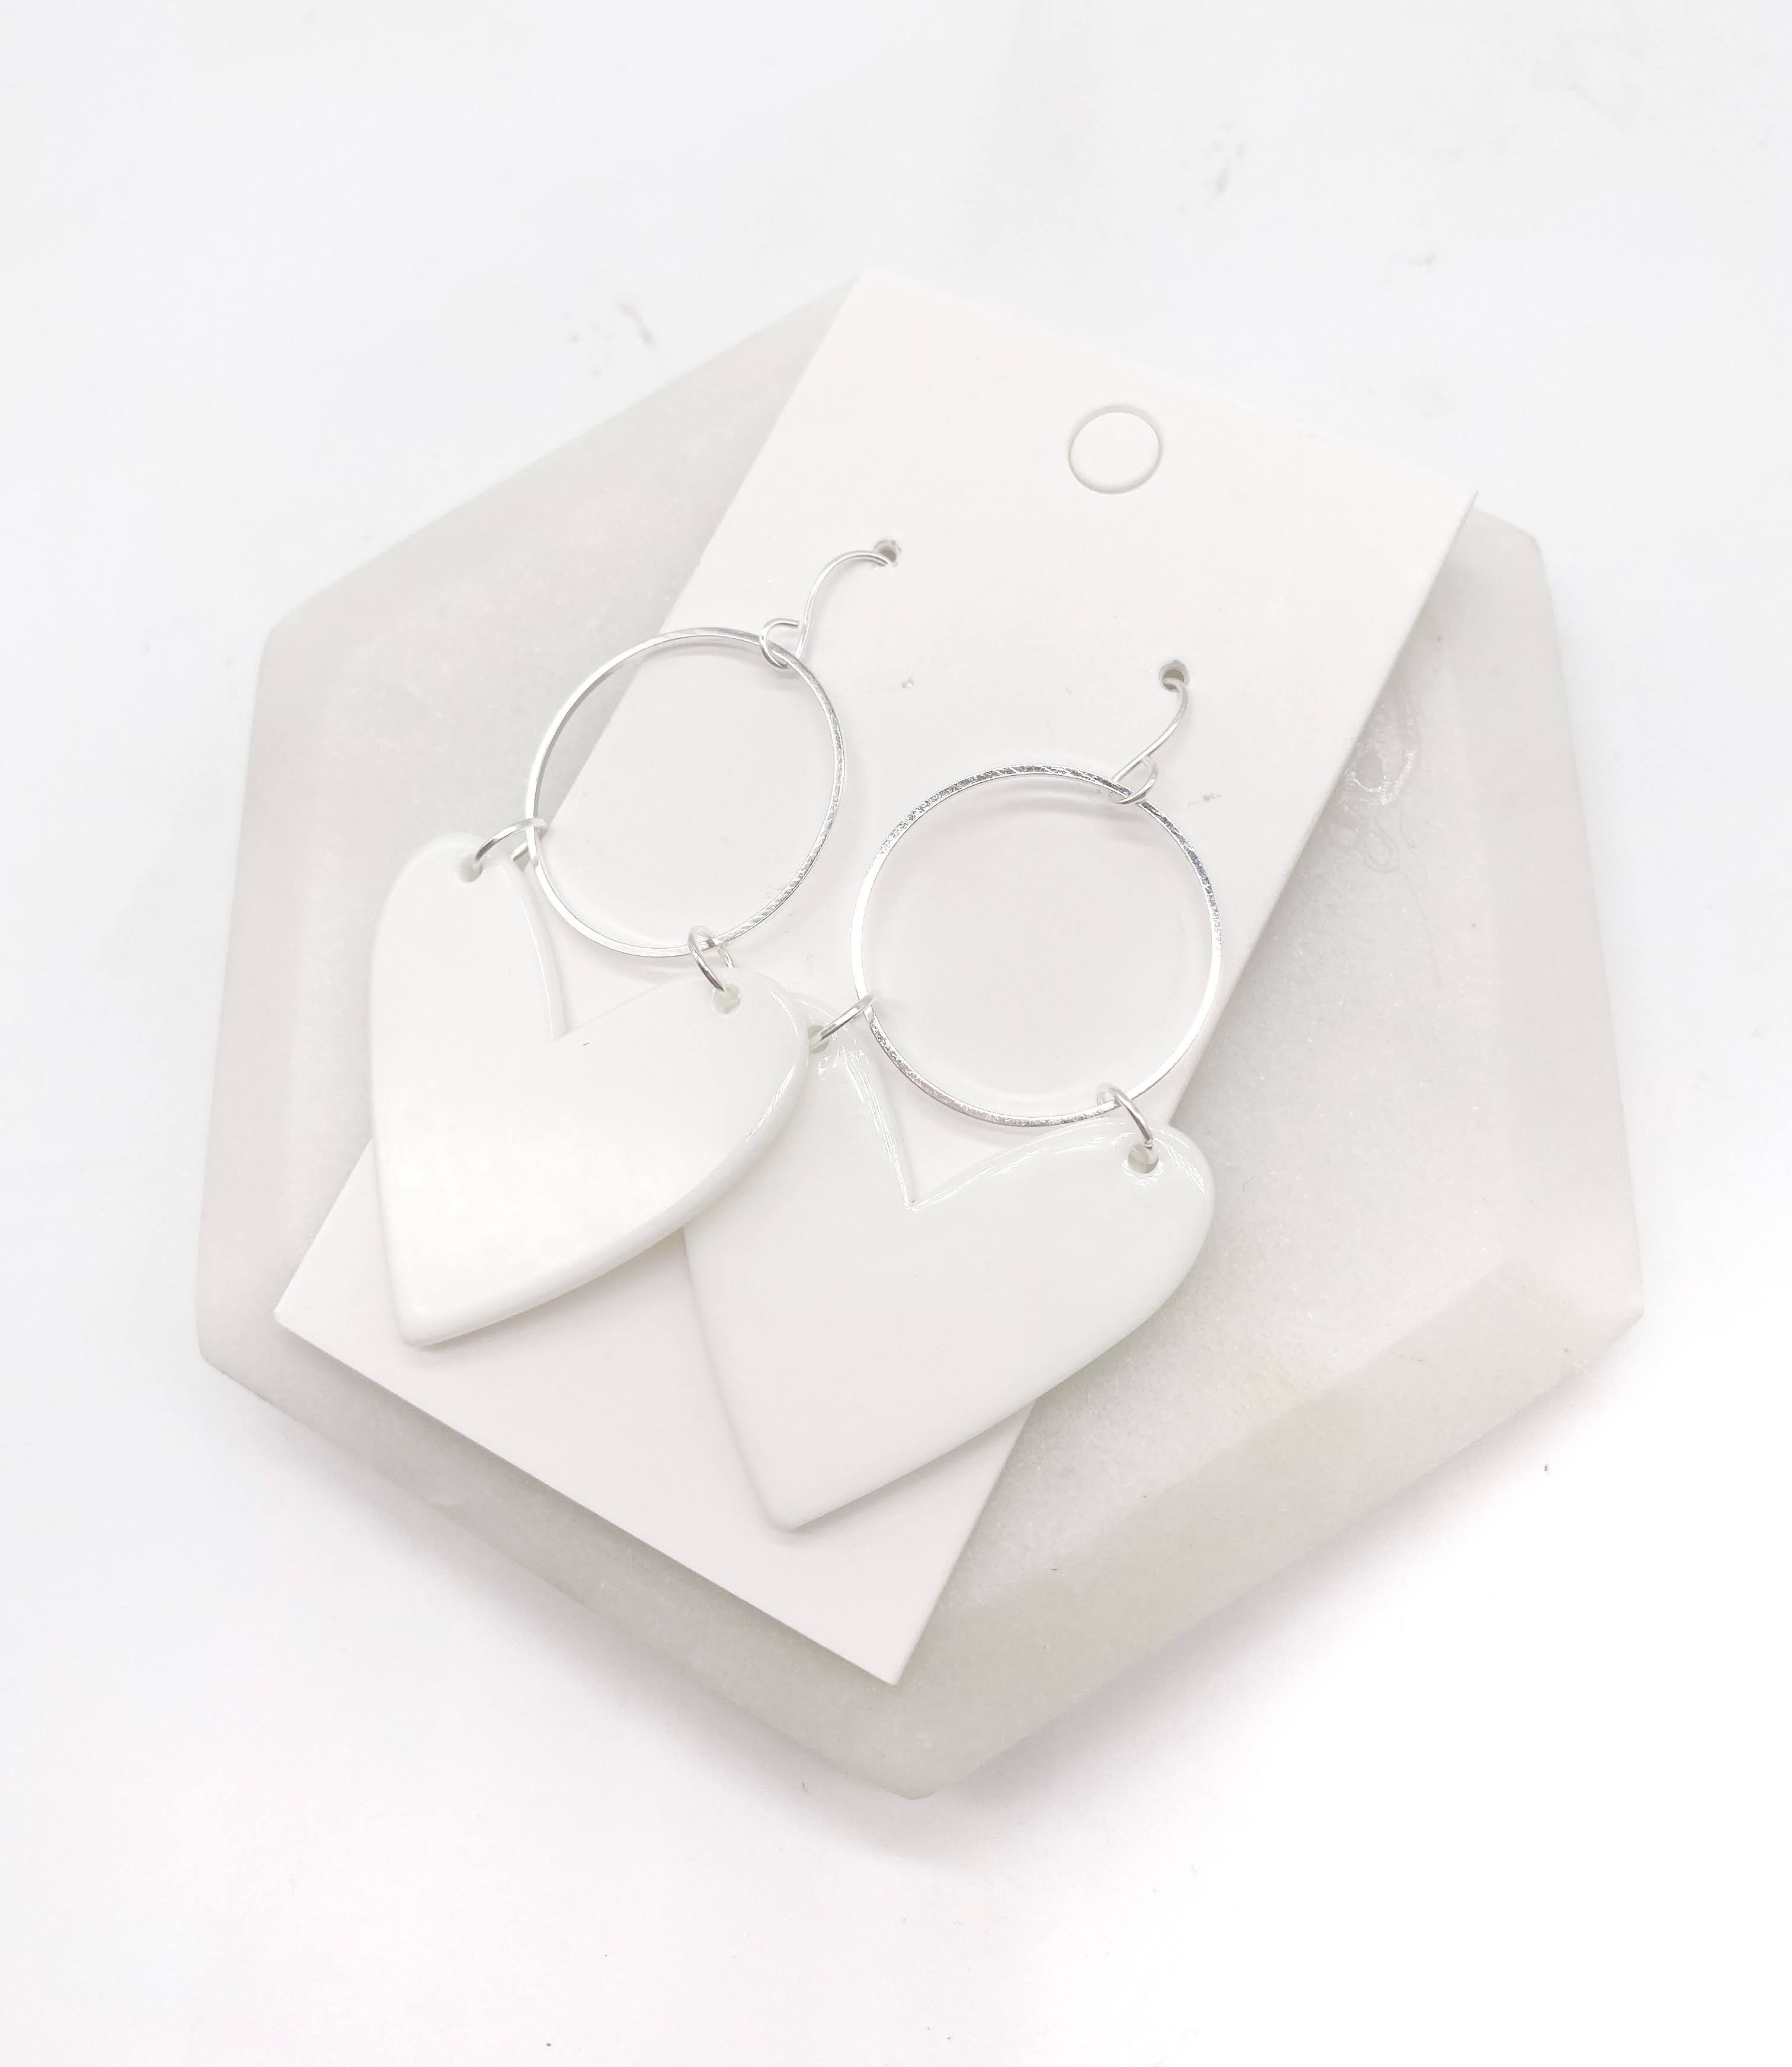 White Heart Acrylic Earrings